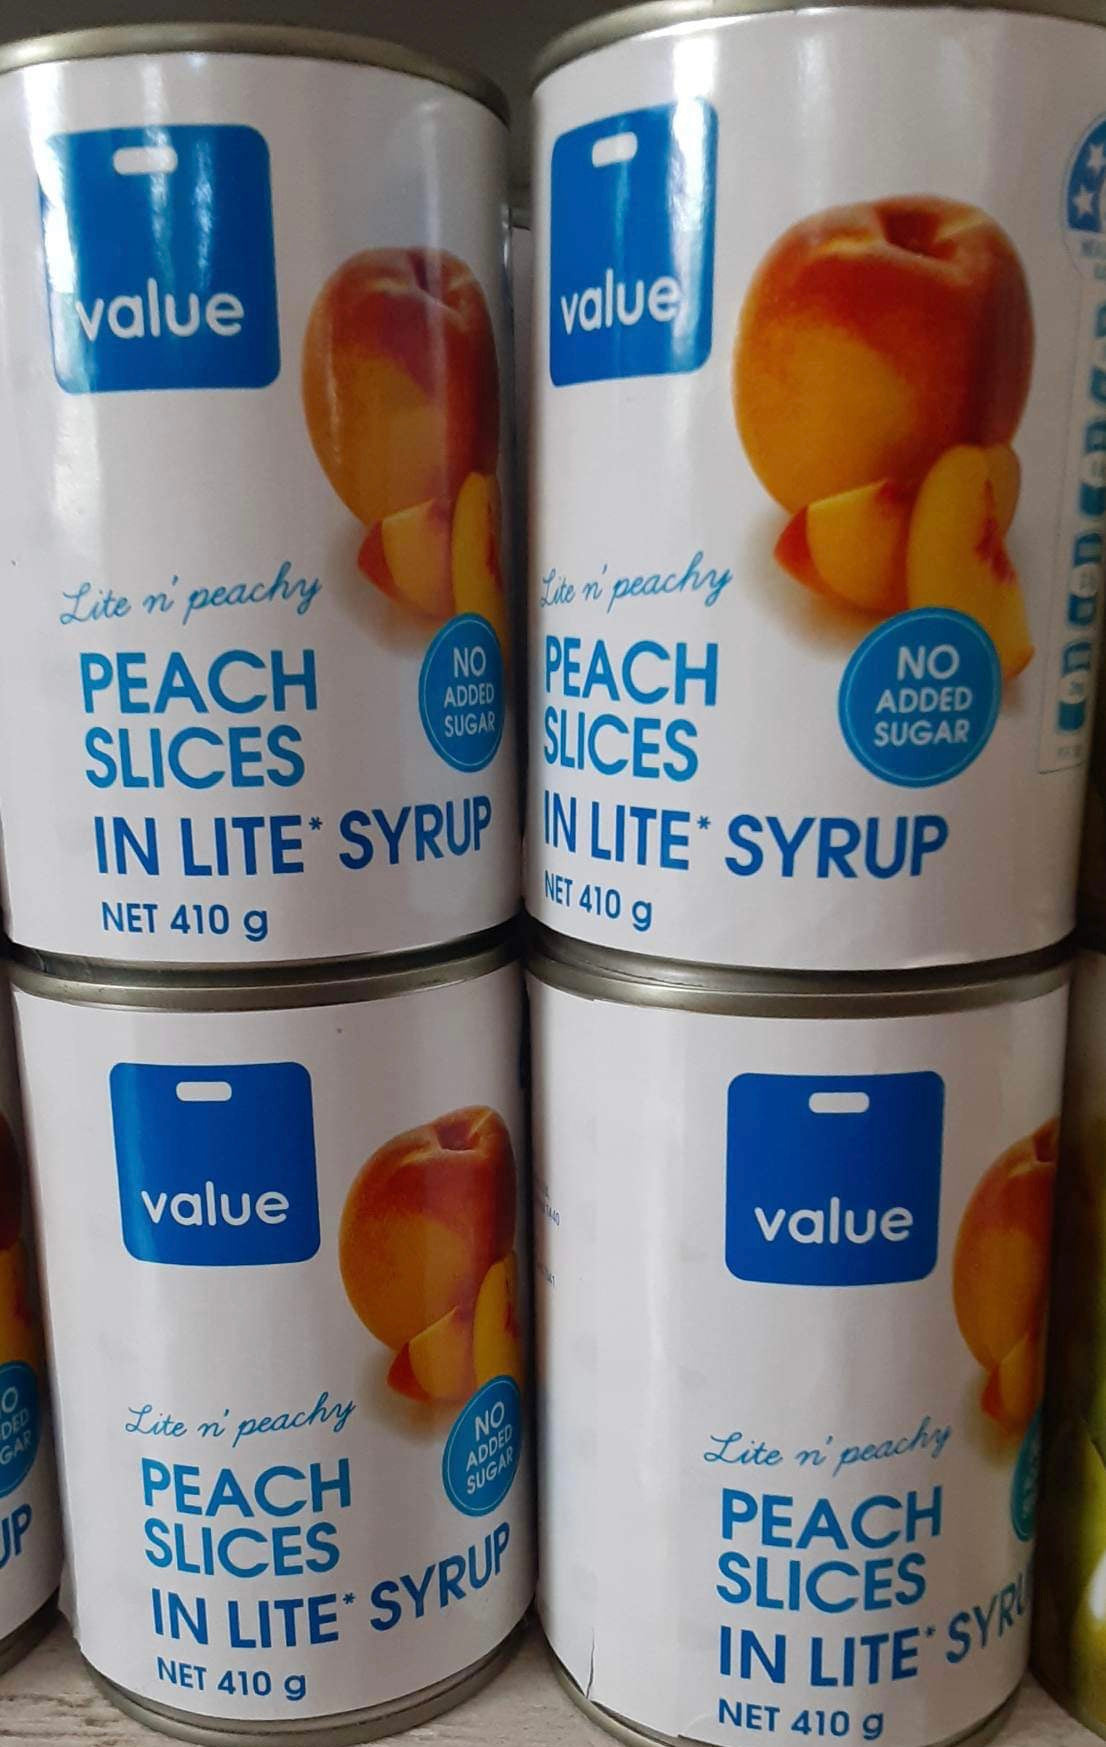 Value Peach Slice in lite syrup